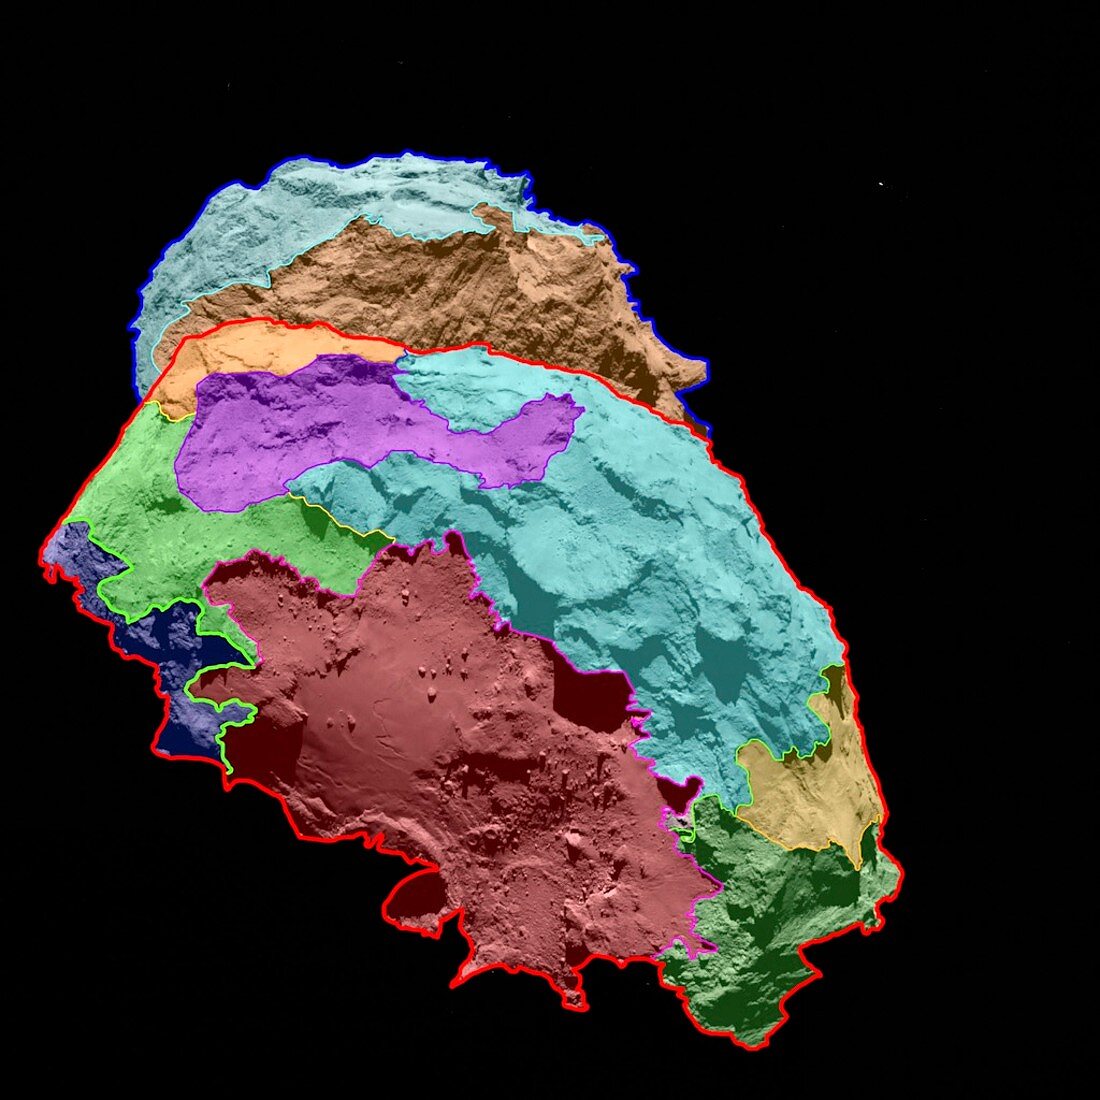 Comet Churyumov-Gerasimenko topography